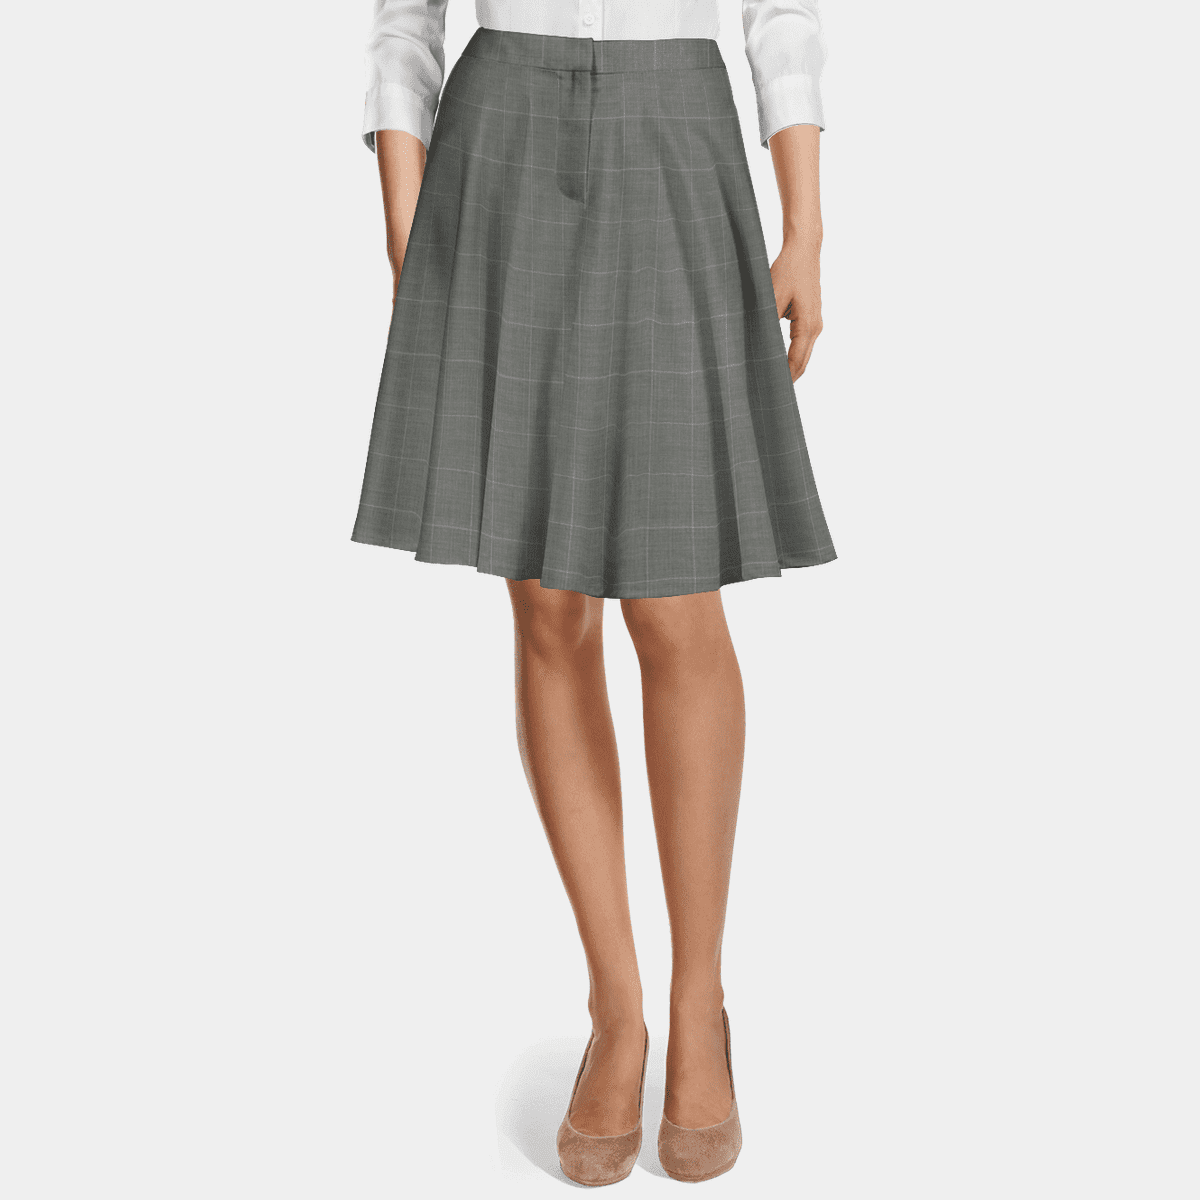 KASAAS Women's Flare A-Line Skirts Casual Pleated Mini Skirt